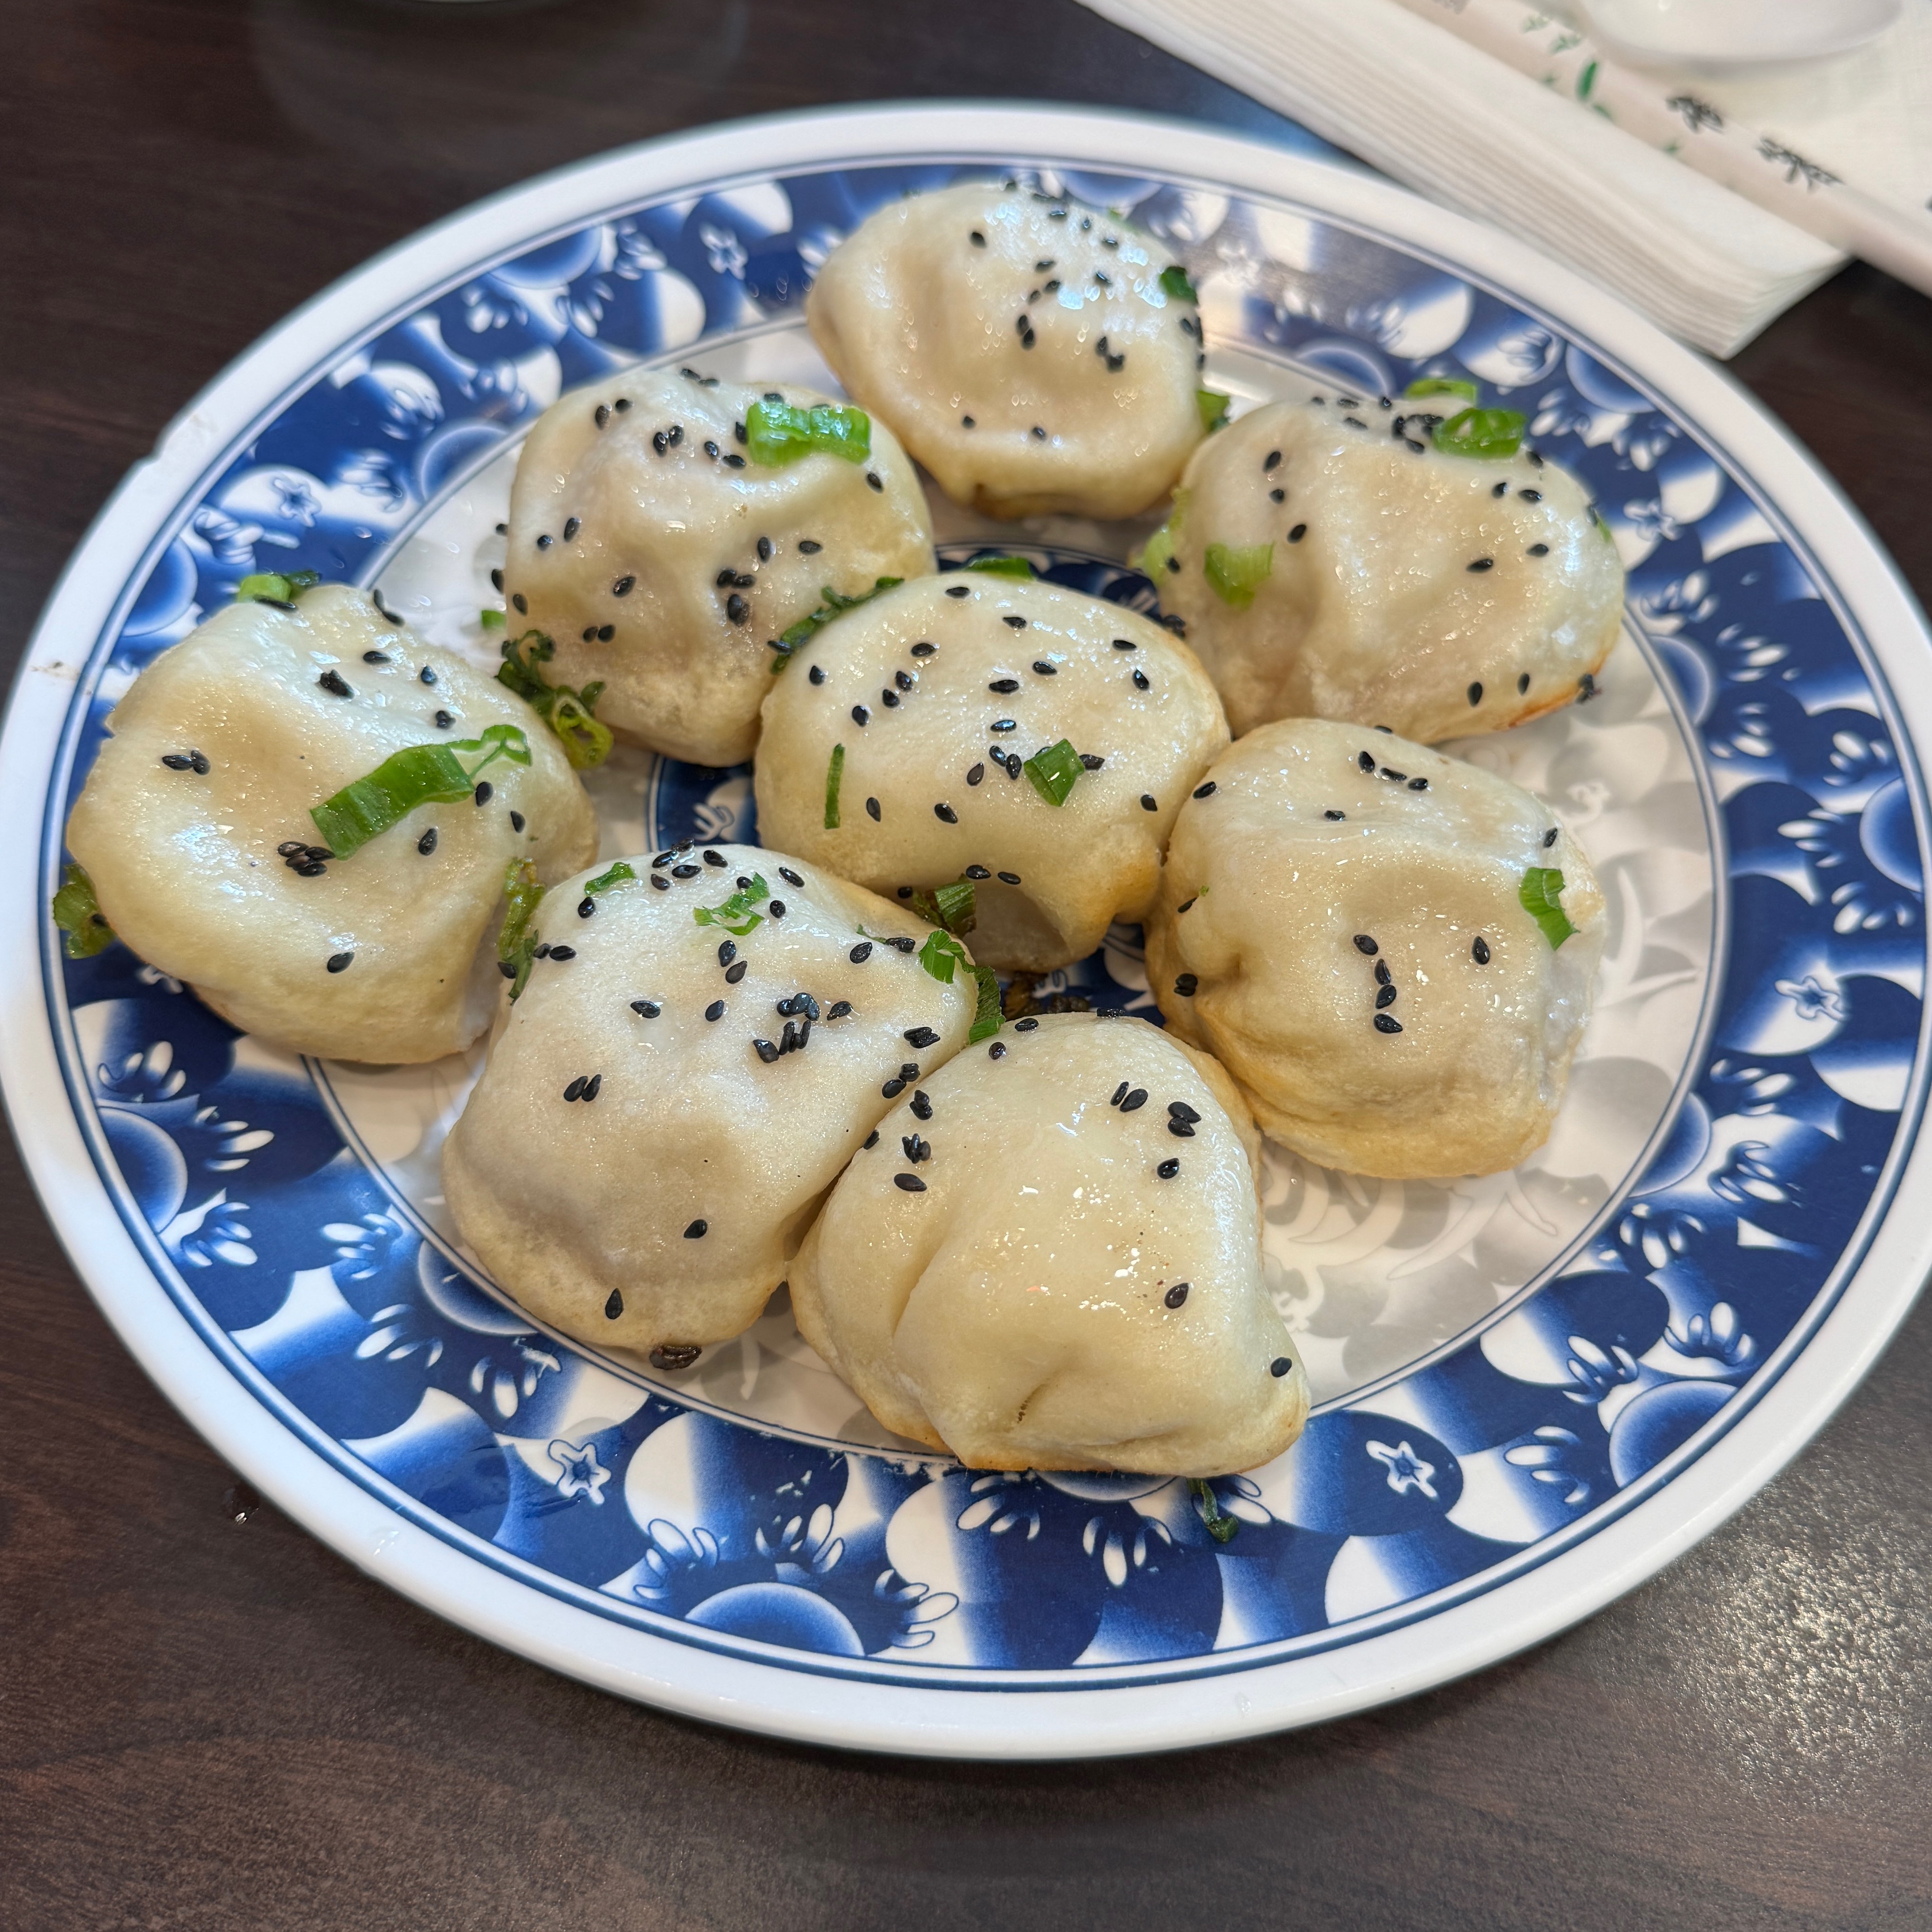 Shen Jiang Bao (Pan Fried Dumpling) $12 from Kang Kang Food Court - Shau May on #foodmento http://foodmento.com/dish/39442